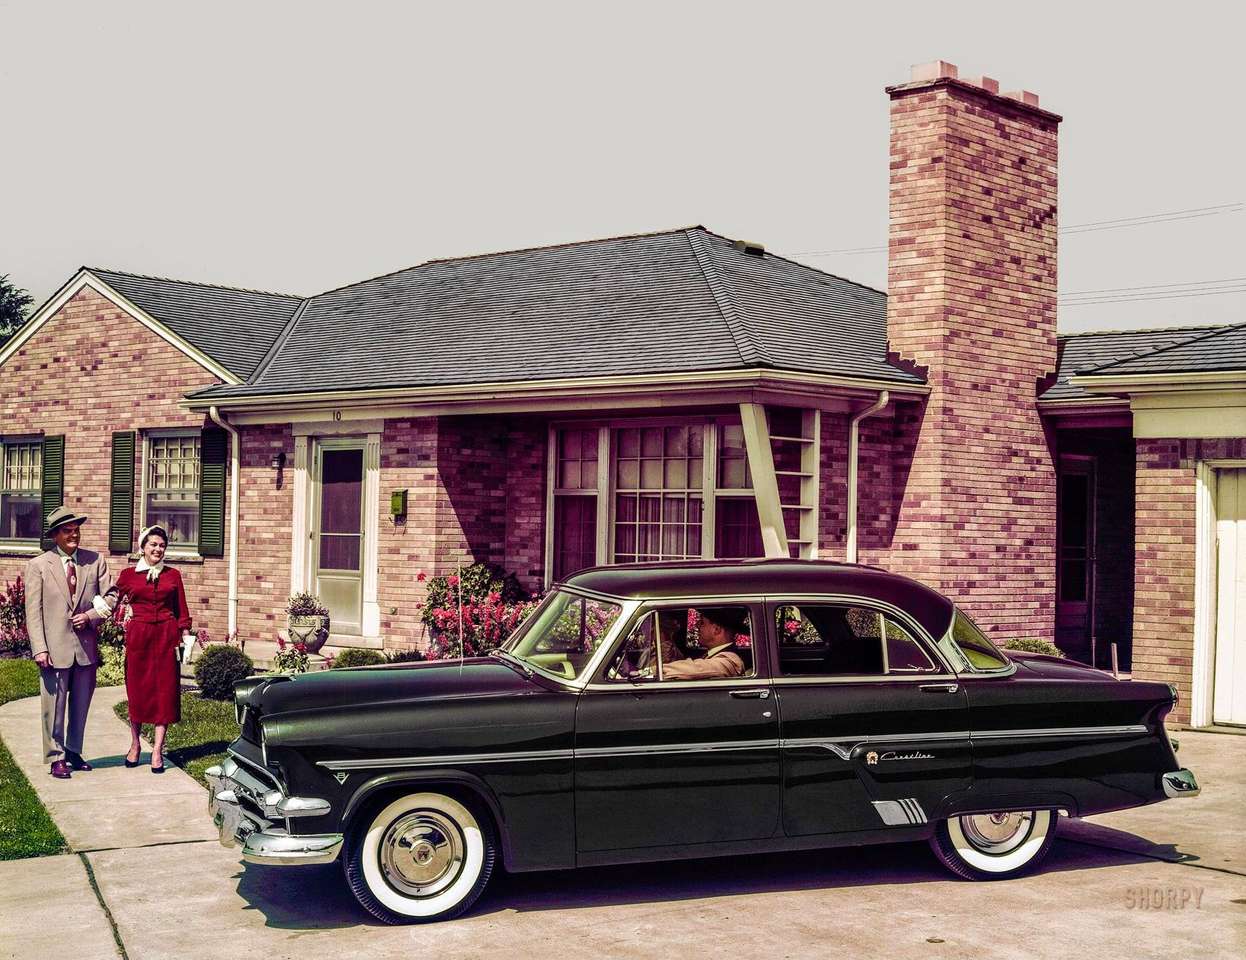 1954 Ford Crestline online puzzle